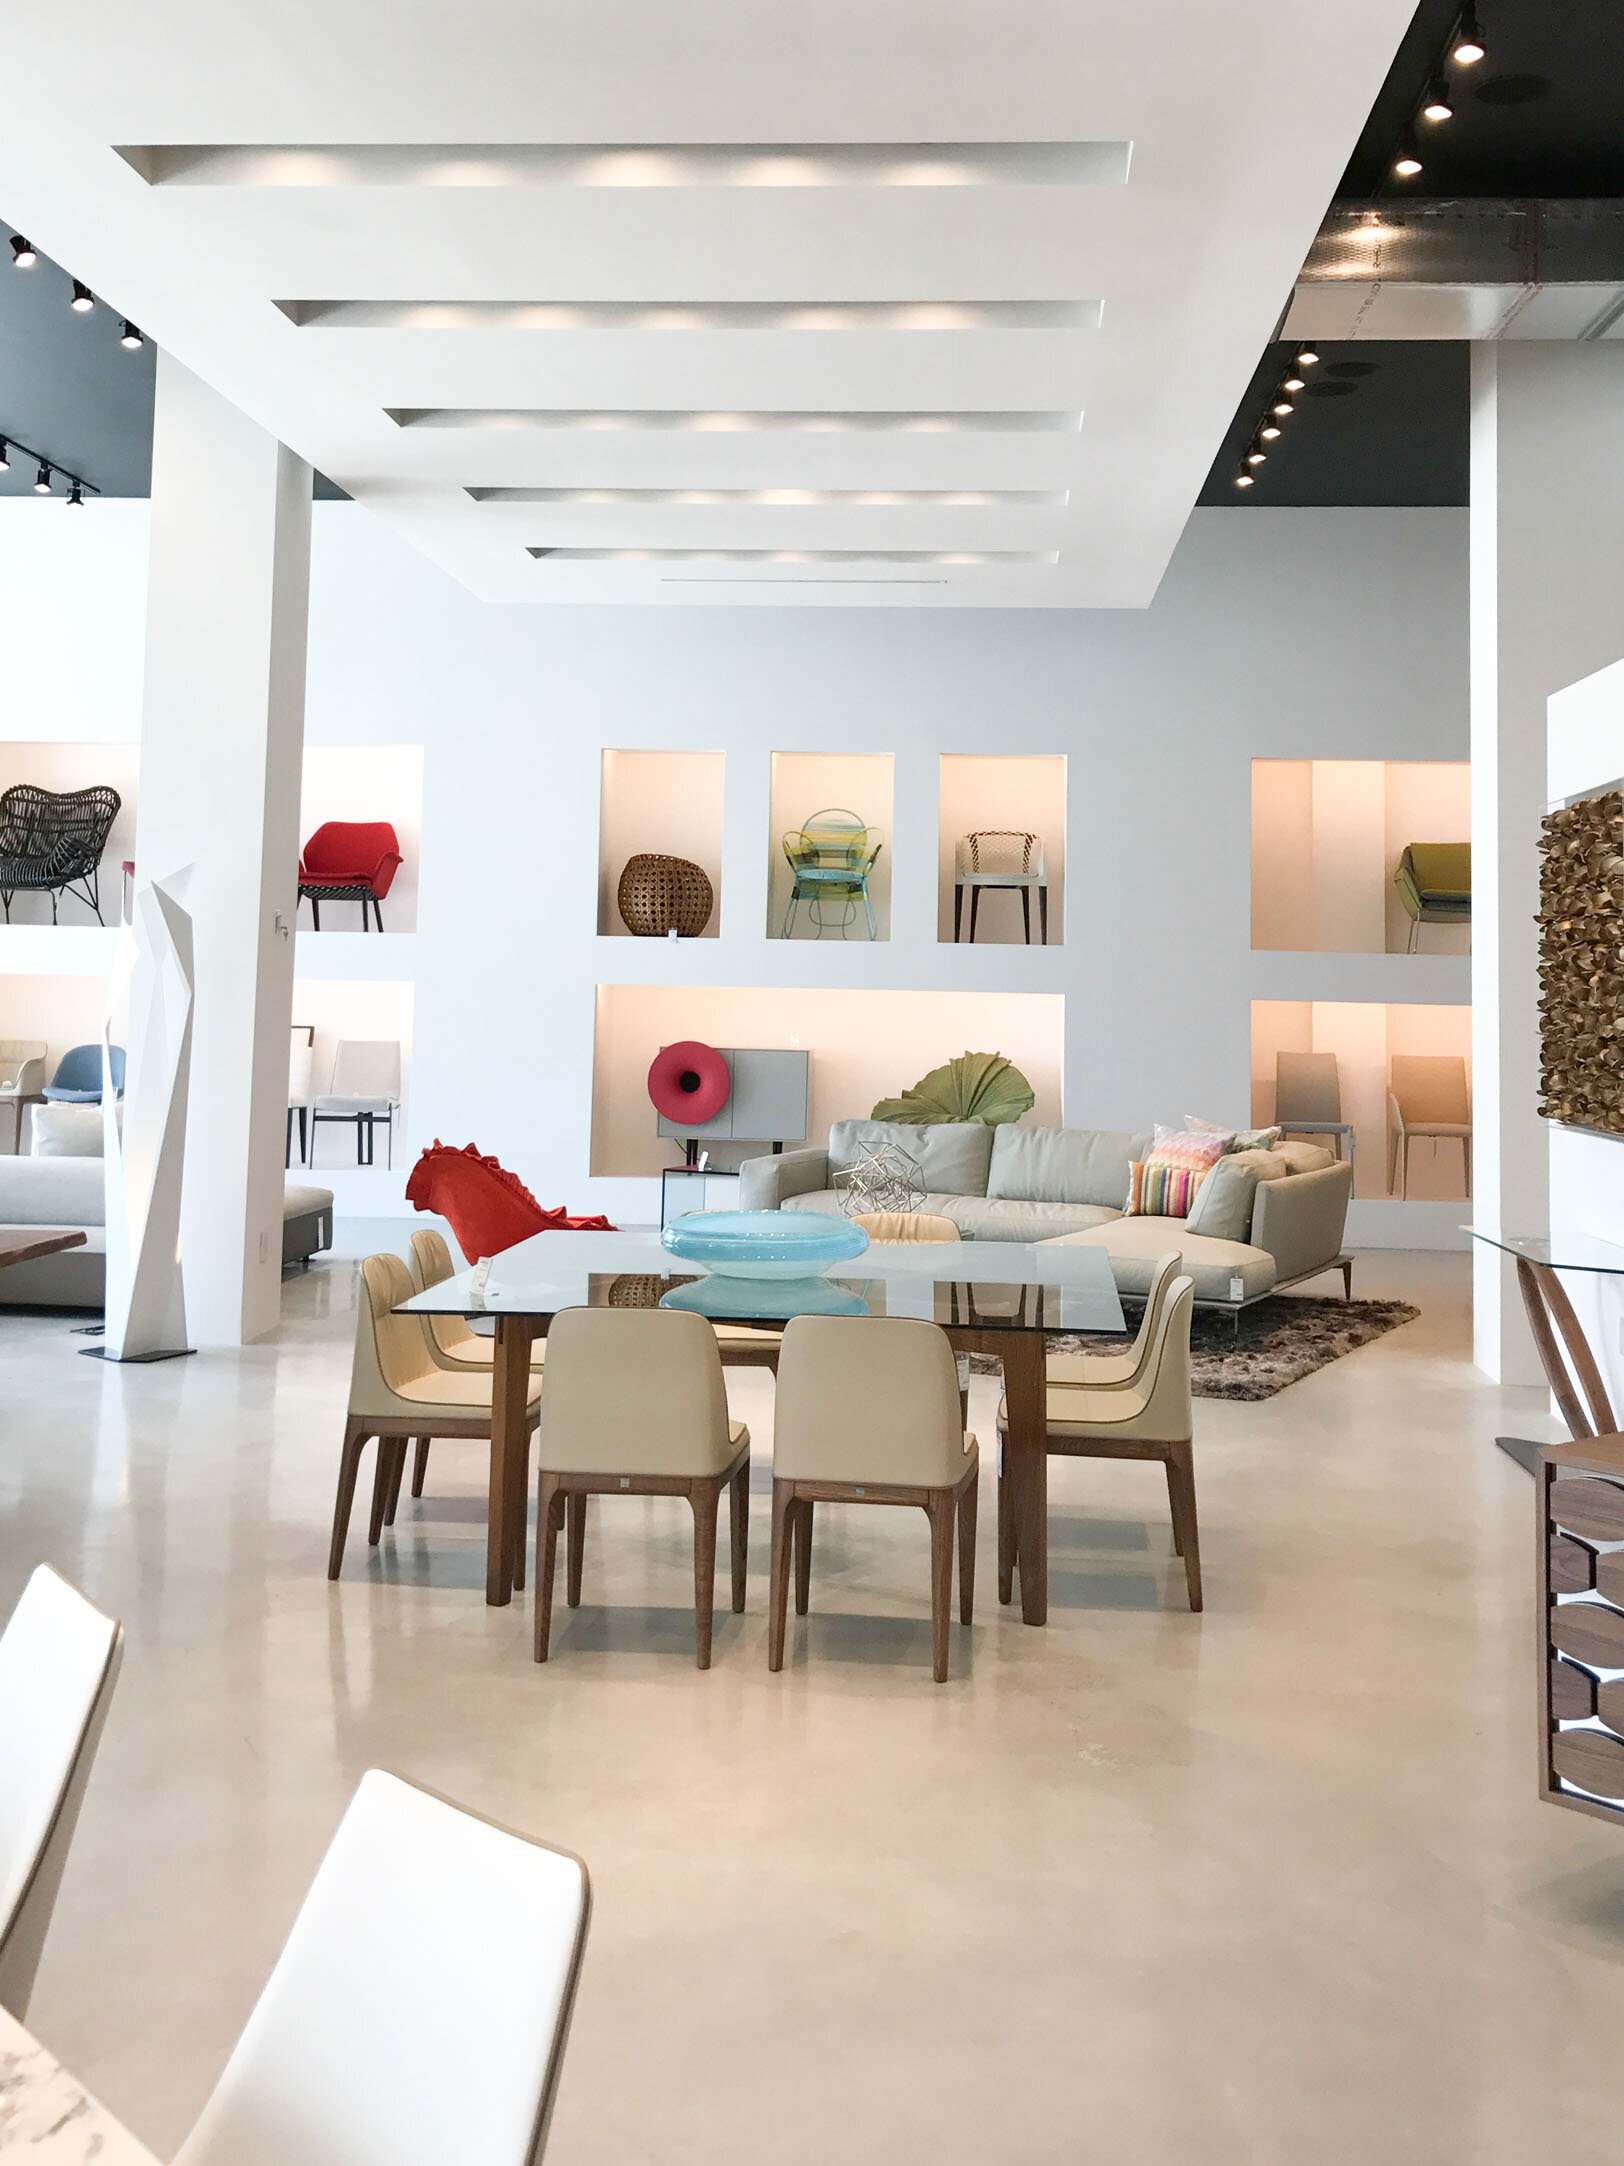 stol-design-group-miami-renovations-interiorism-addison-house-showroom-05.jpg